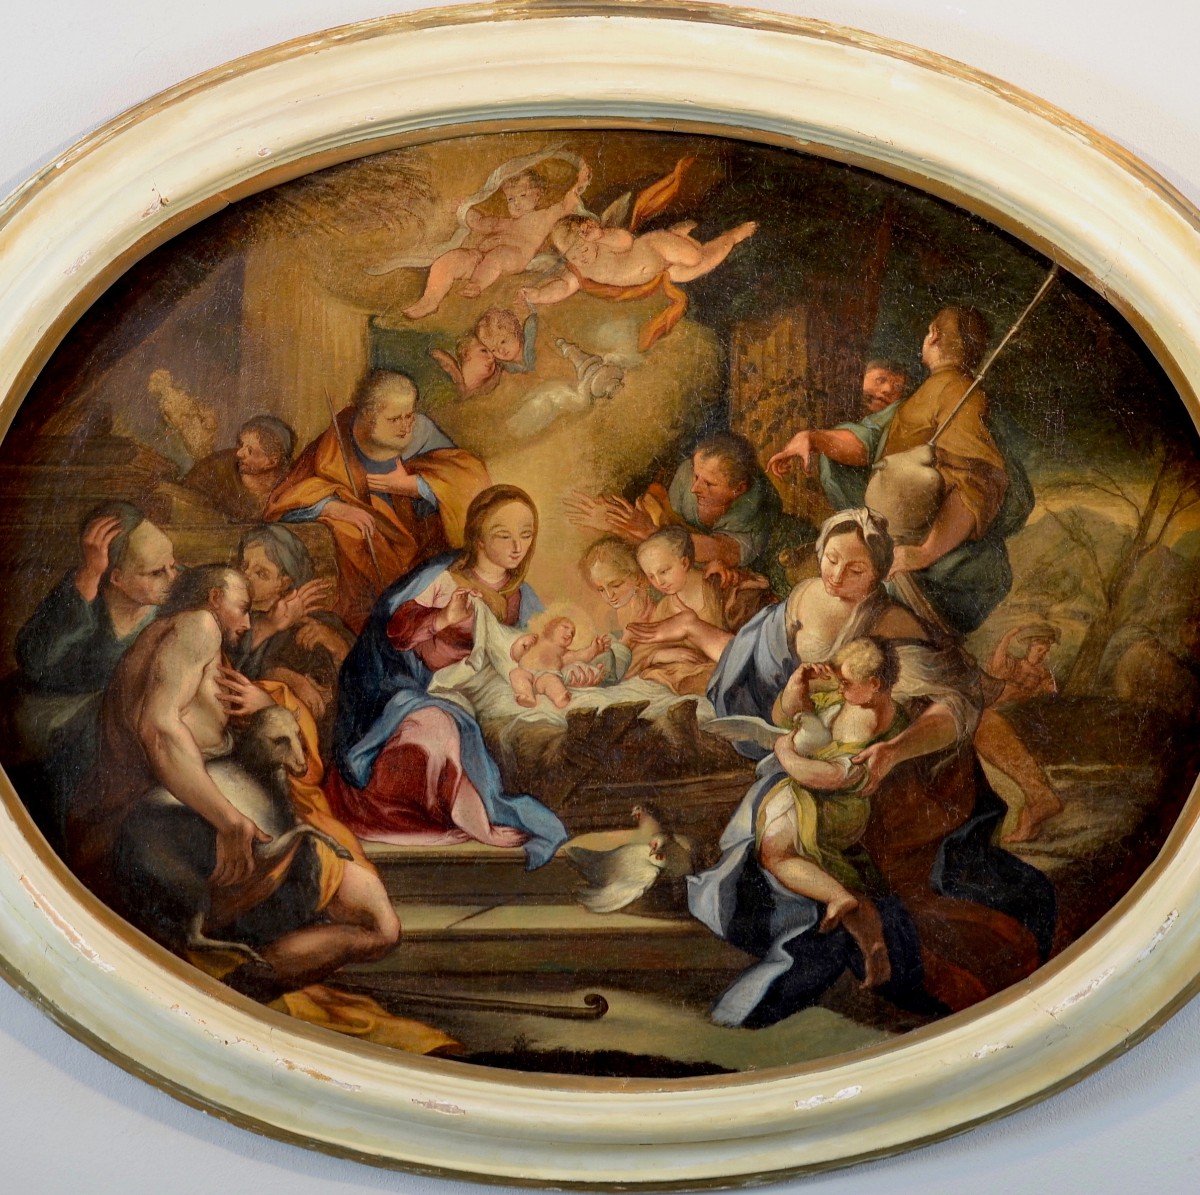 Sebastiano Conca (naples 1680 - 1764), The Adoration Of The Shepherds